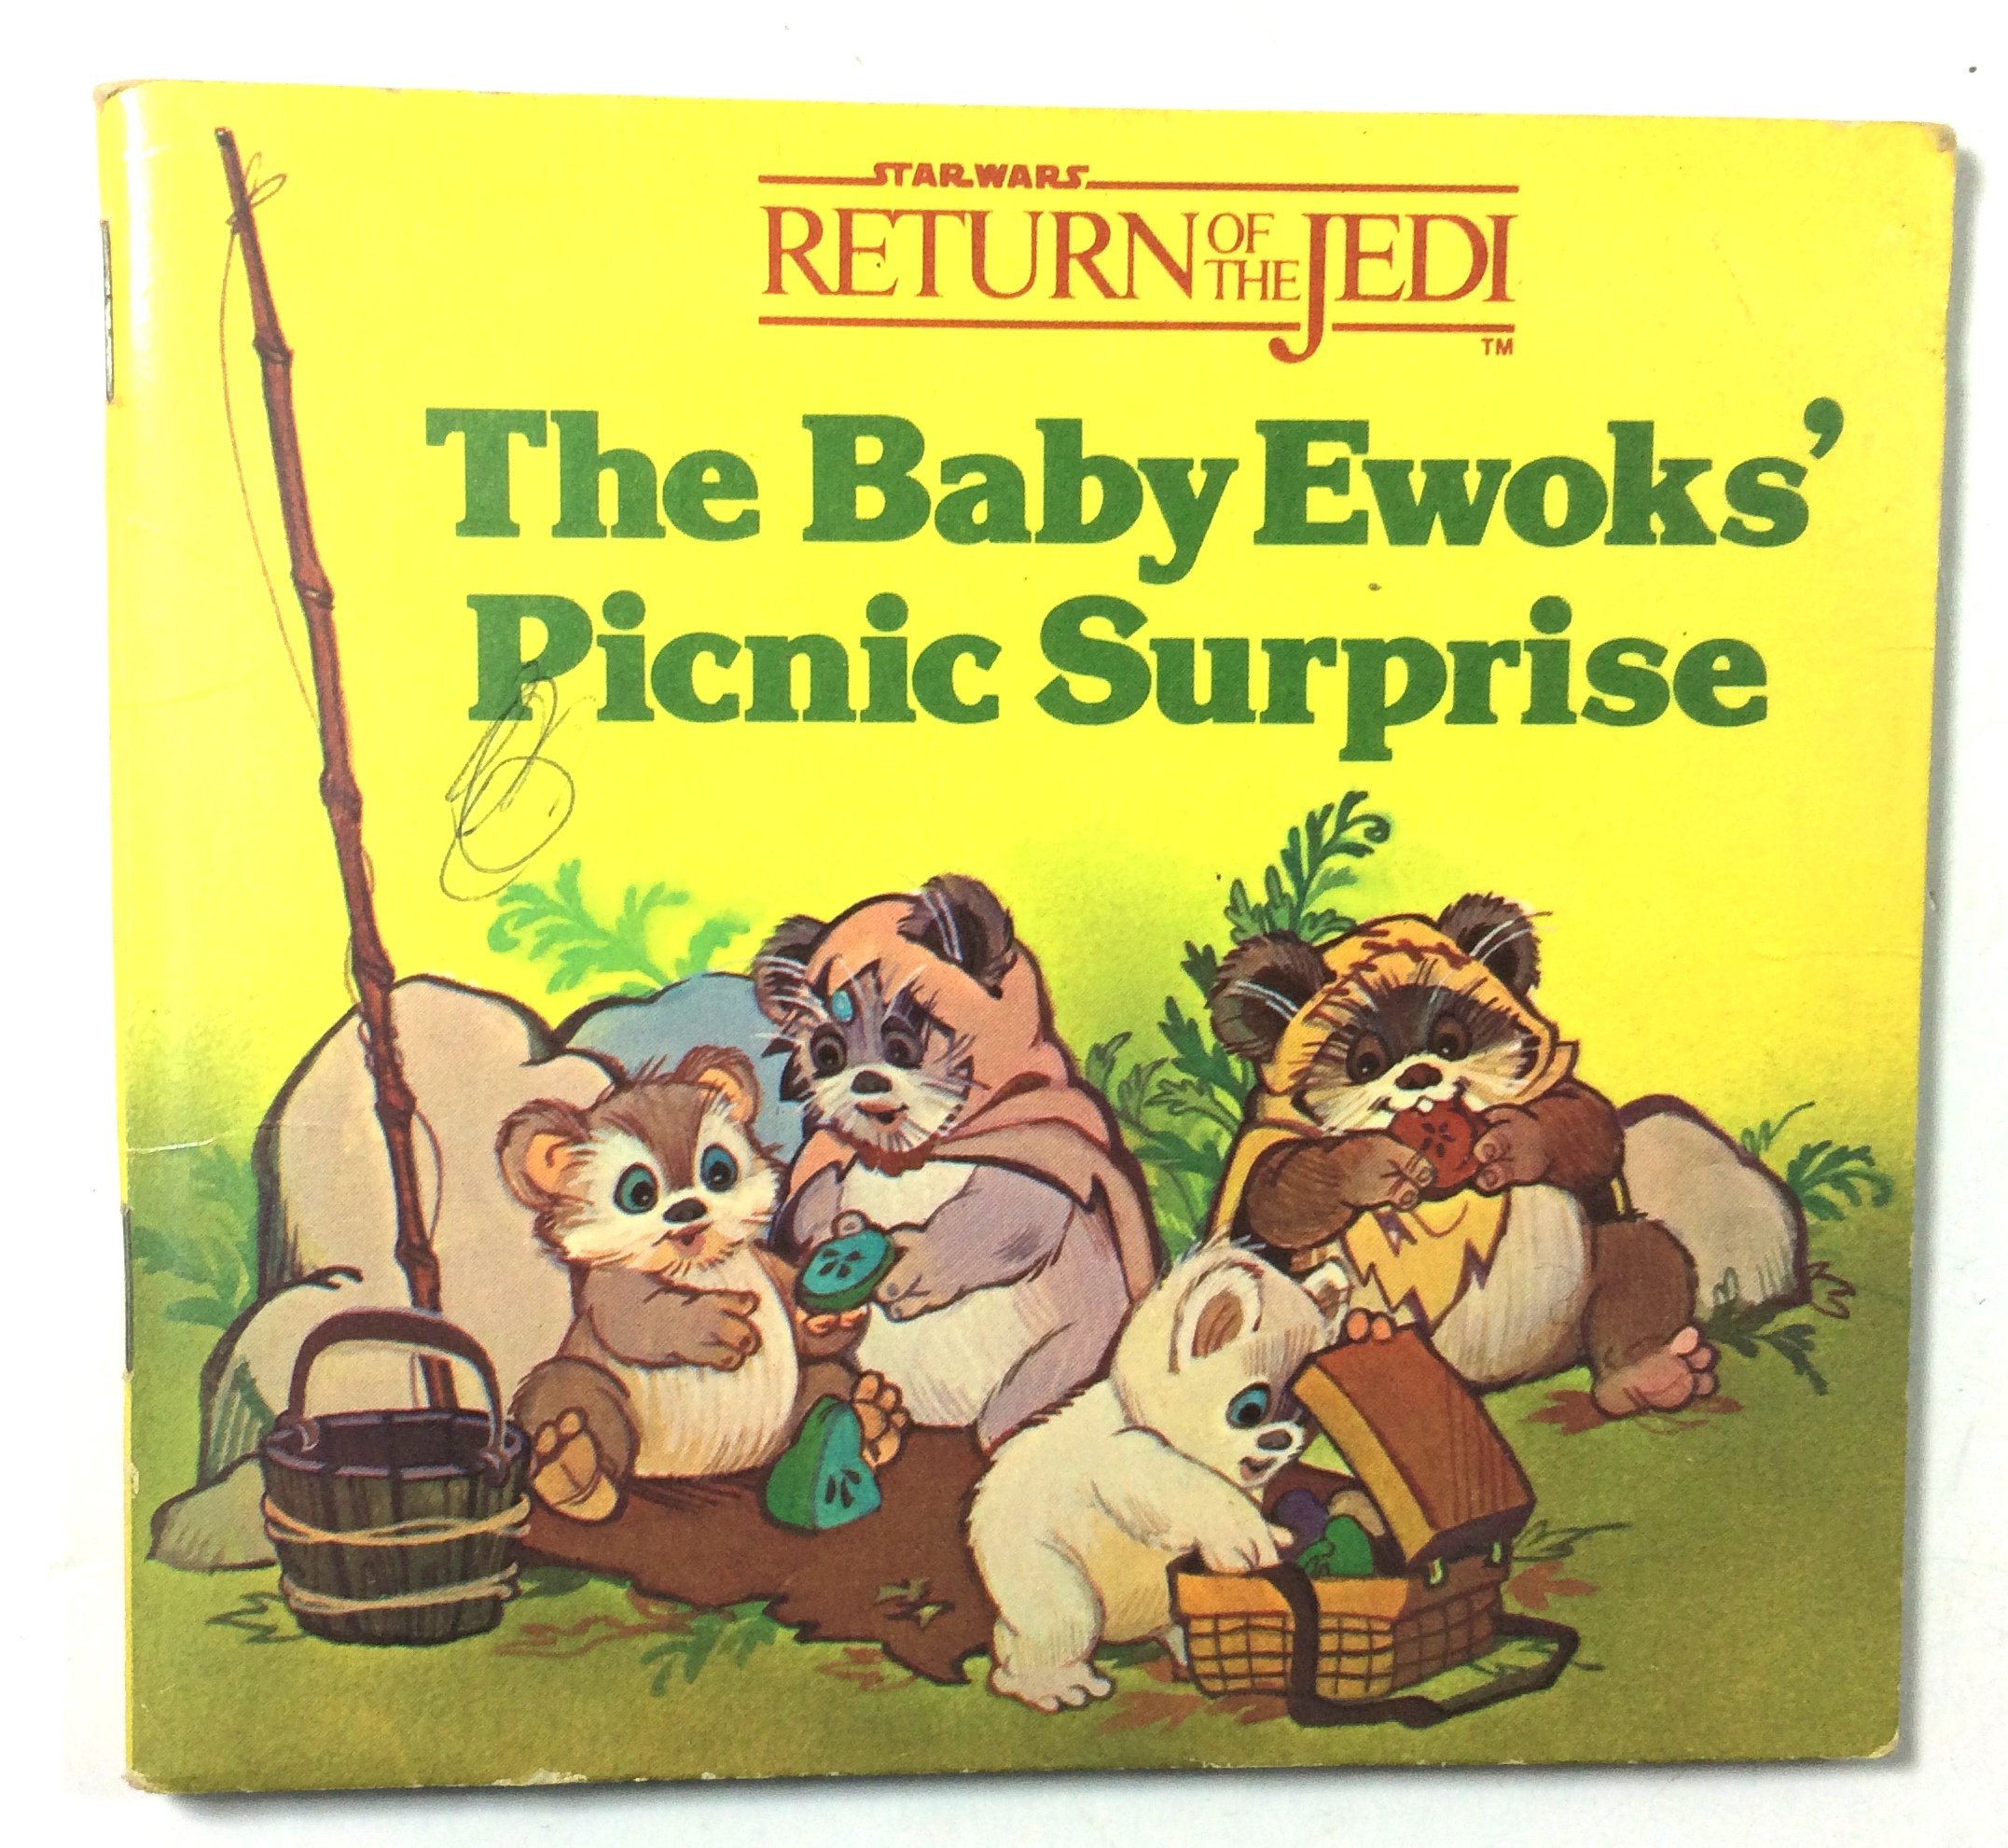 Plik:The Baby Ewoks' Picnic Surprise.jpg